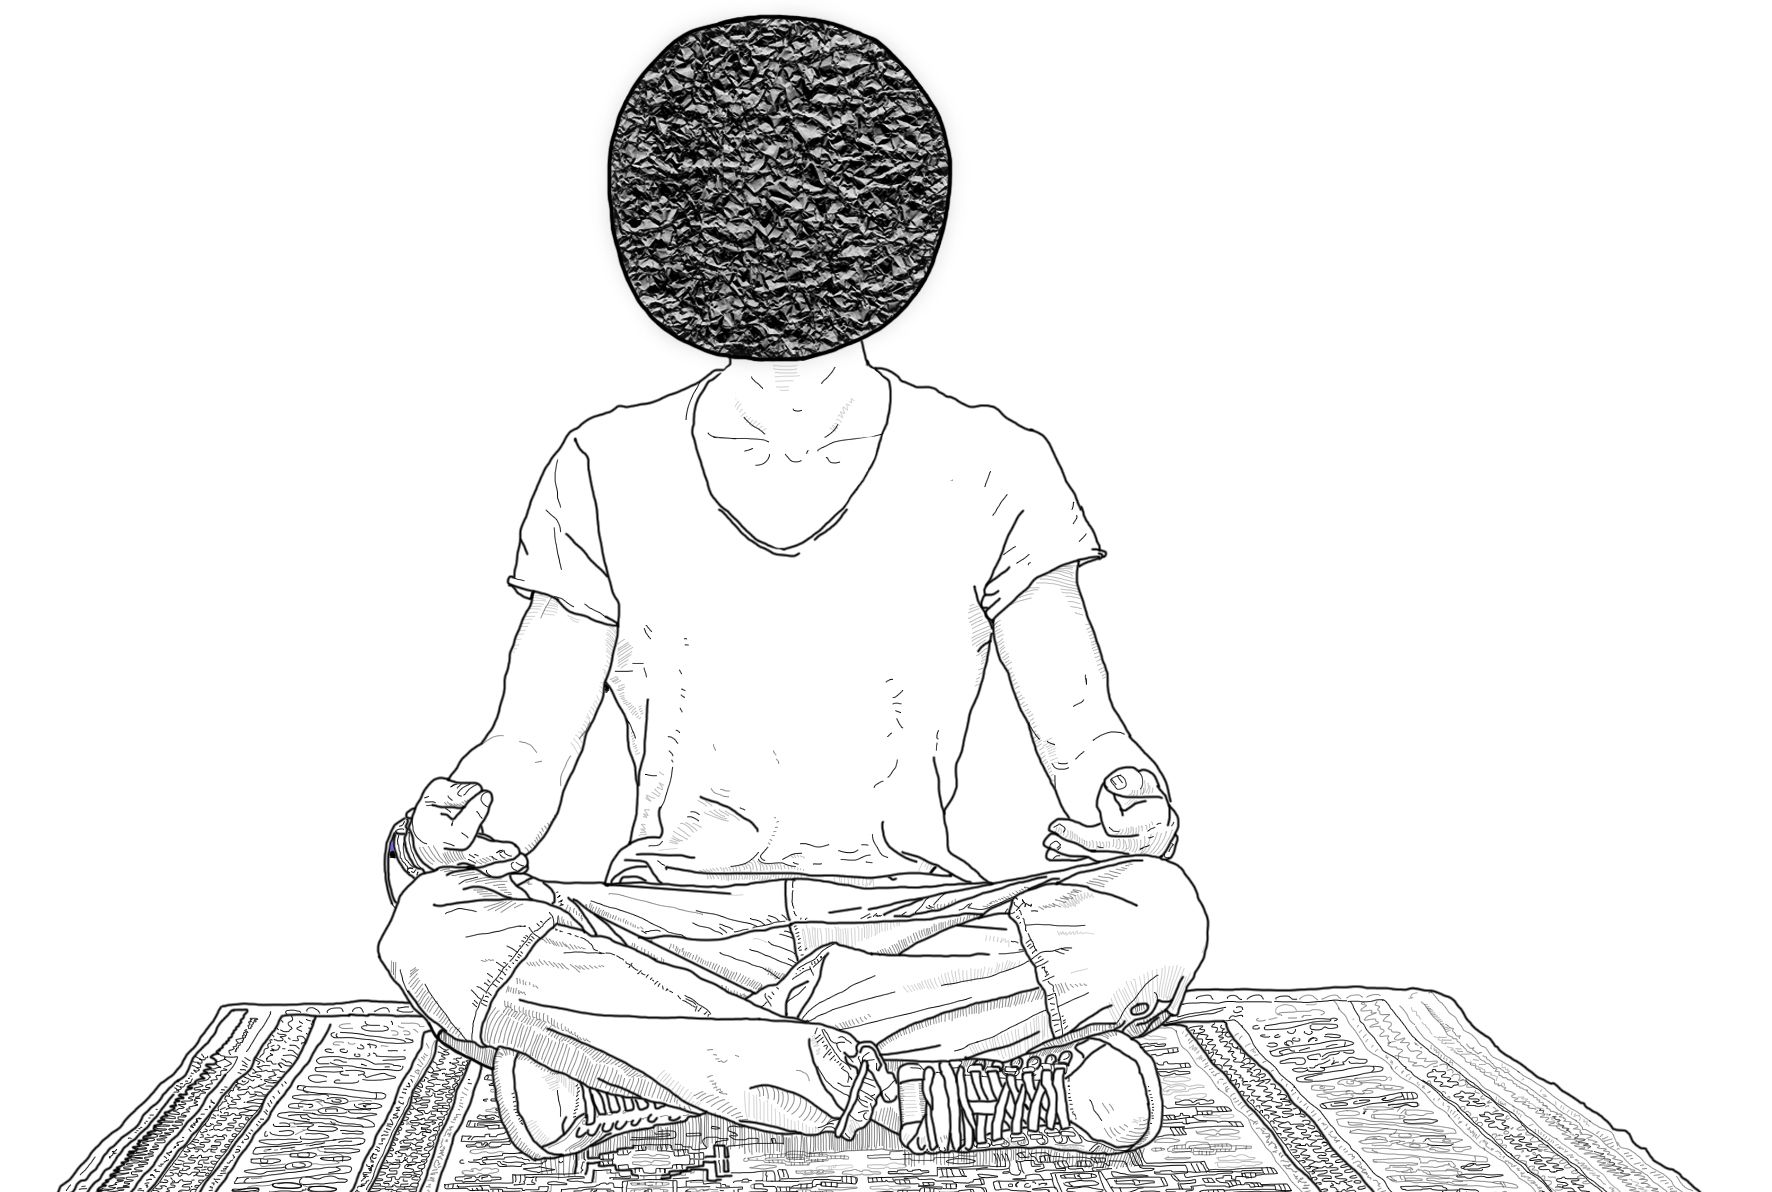 sitting meditation